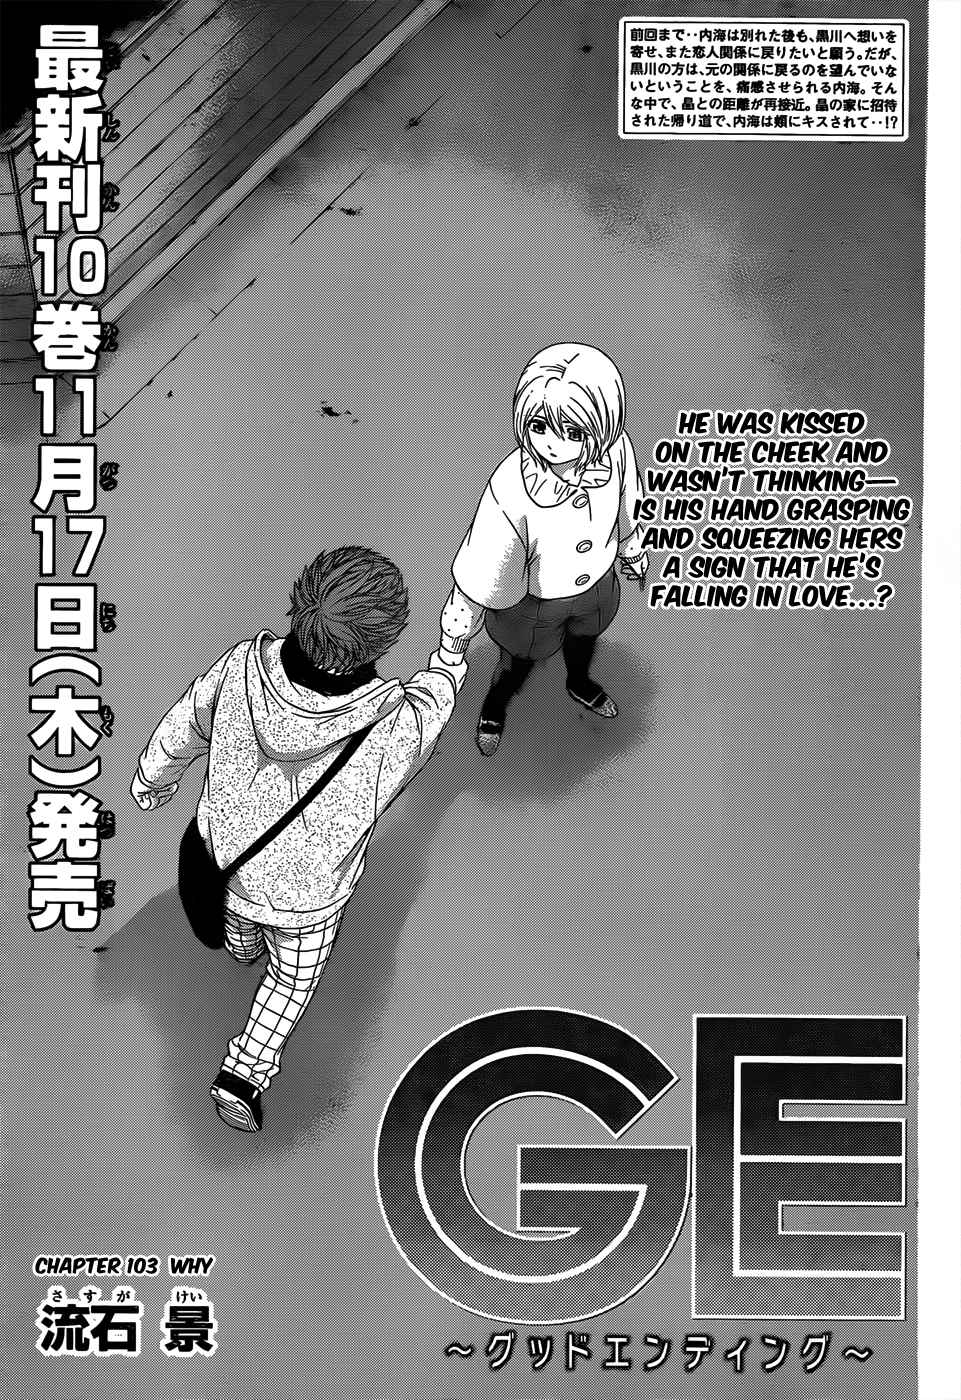 GE ~Good Ending~ Vol. 11 Ch. 103 Why